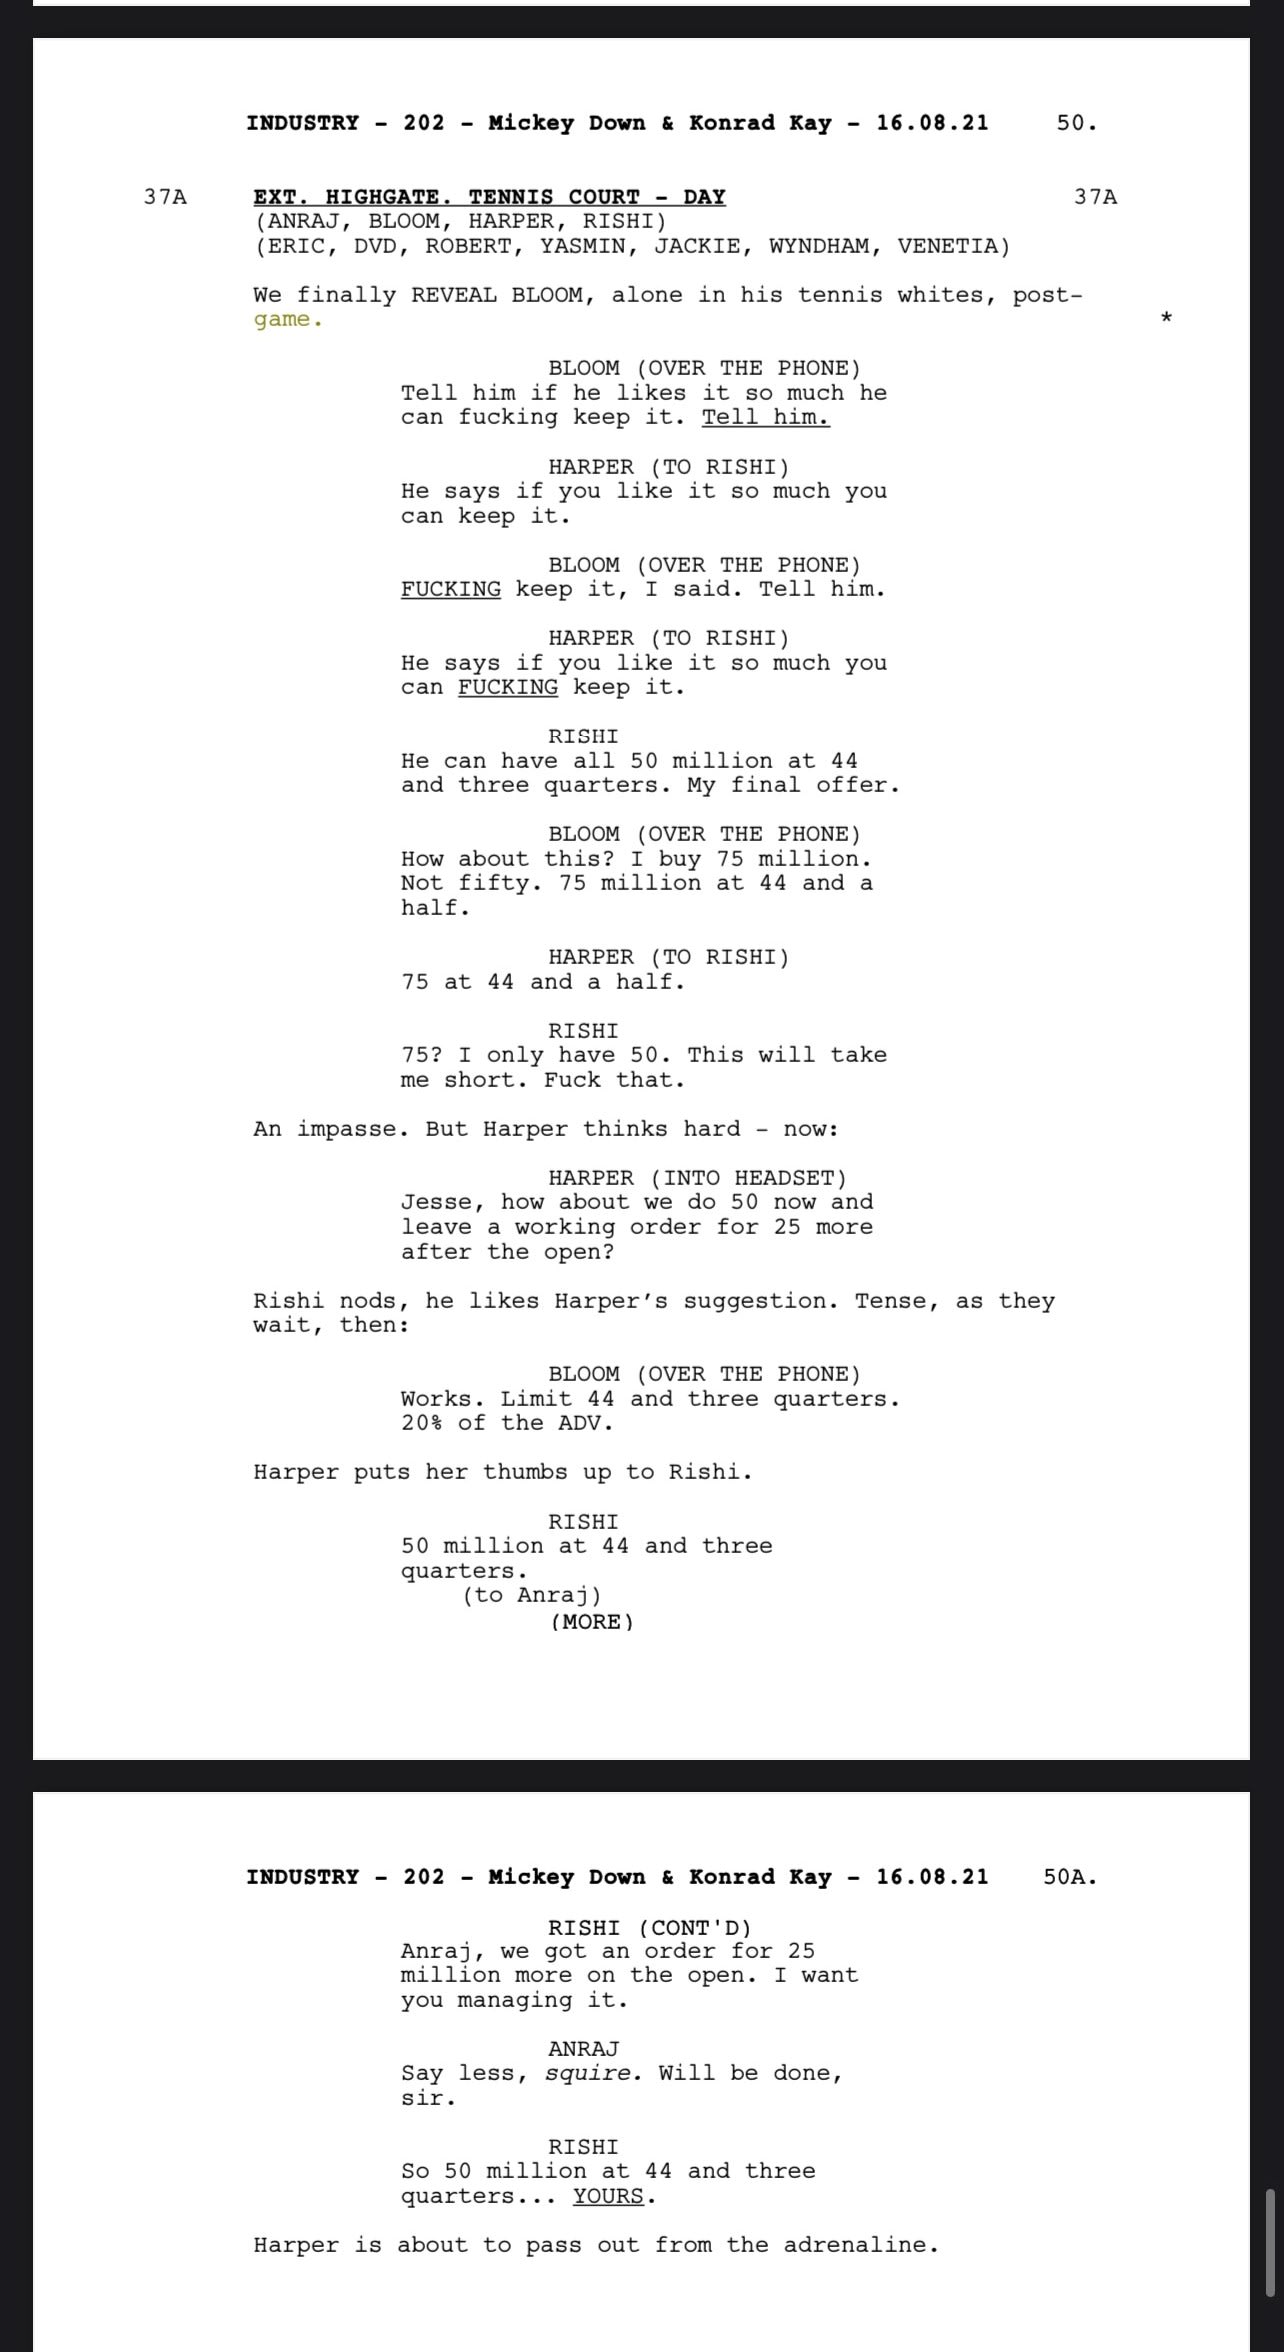 industry season 2 mickey down konrad kay interview script page 1